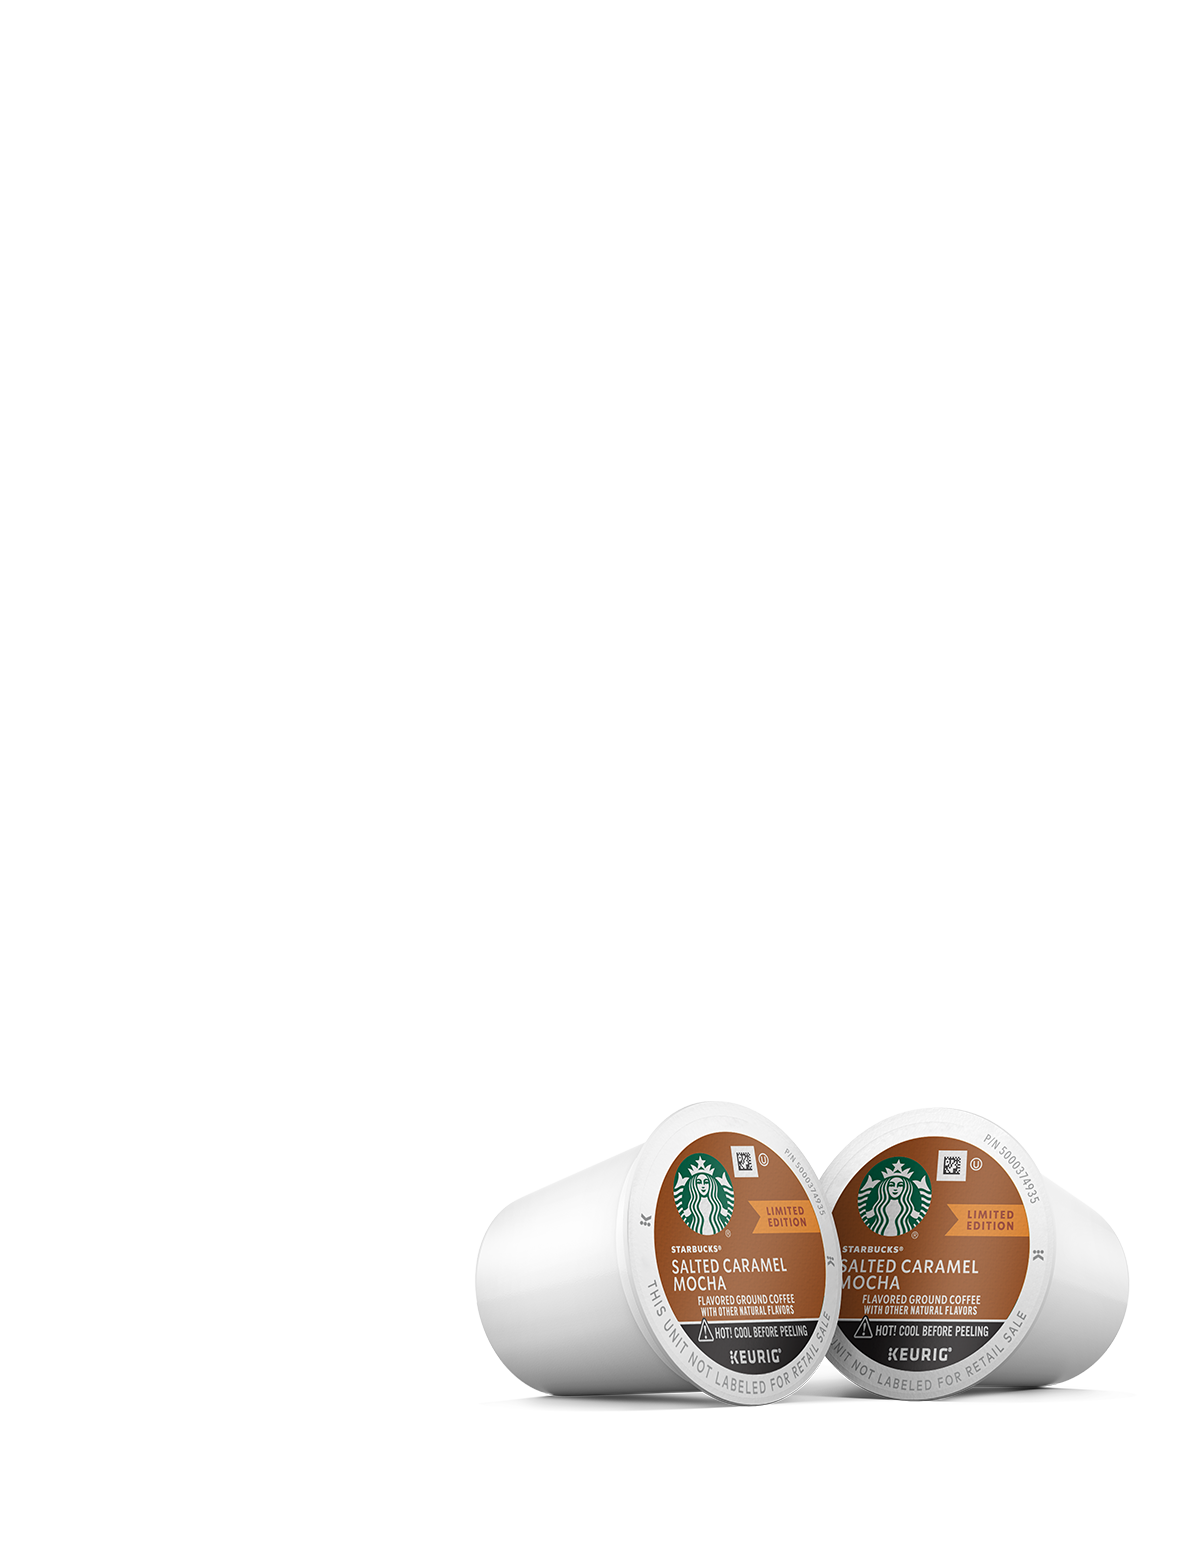 Starbucks® Salted Caramel Mocha Naturally Flavored Coffee